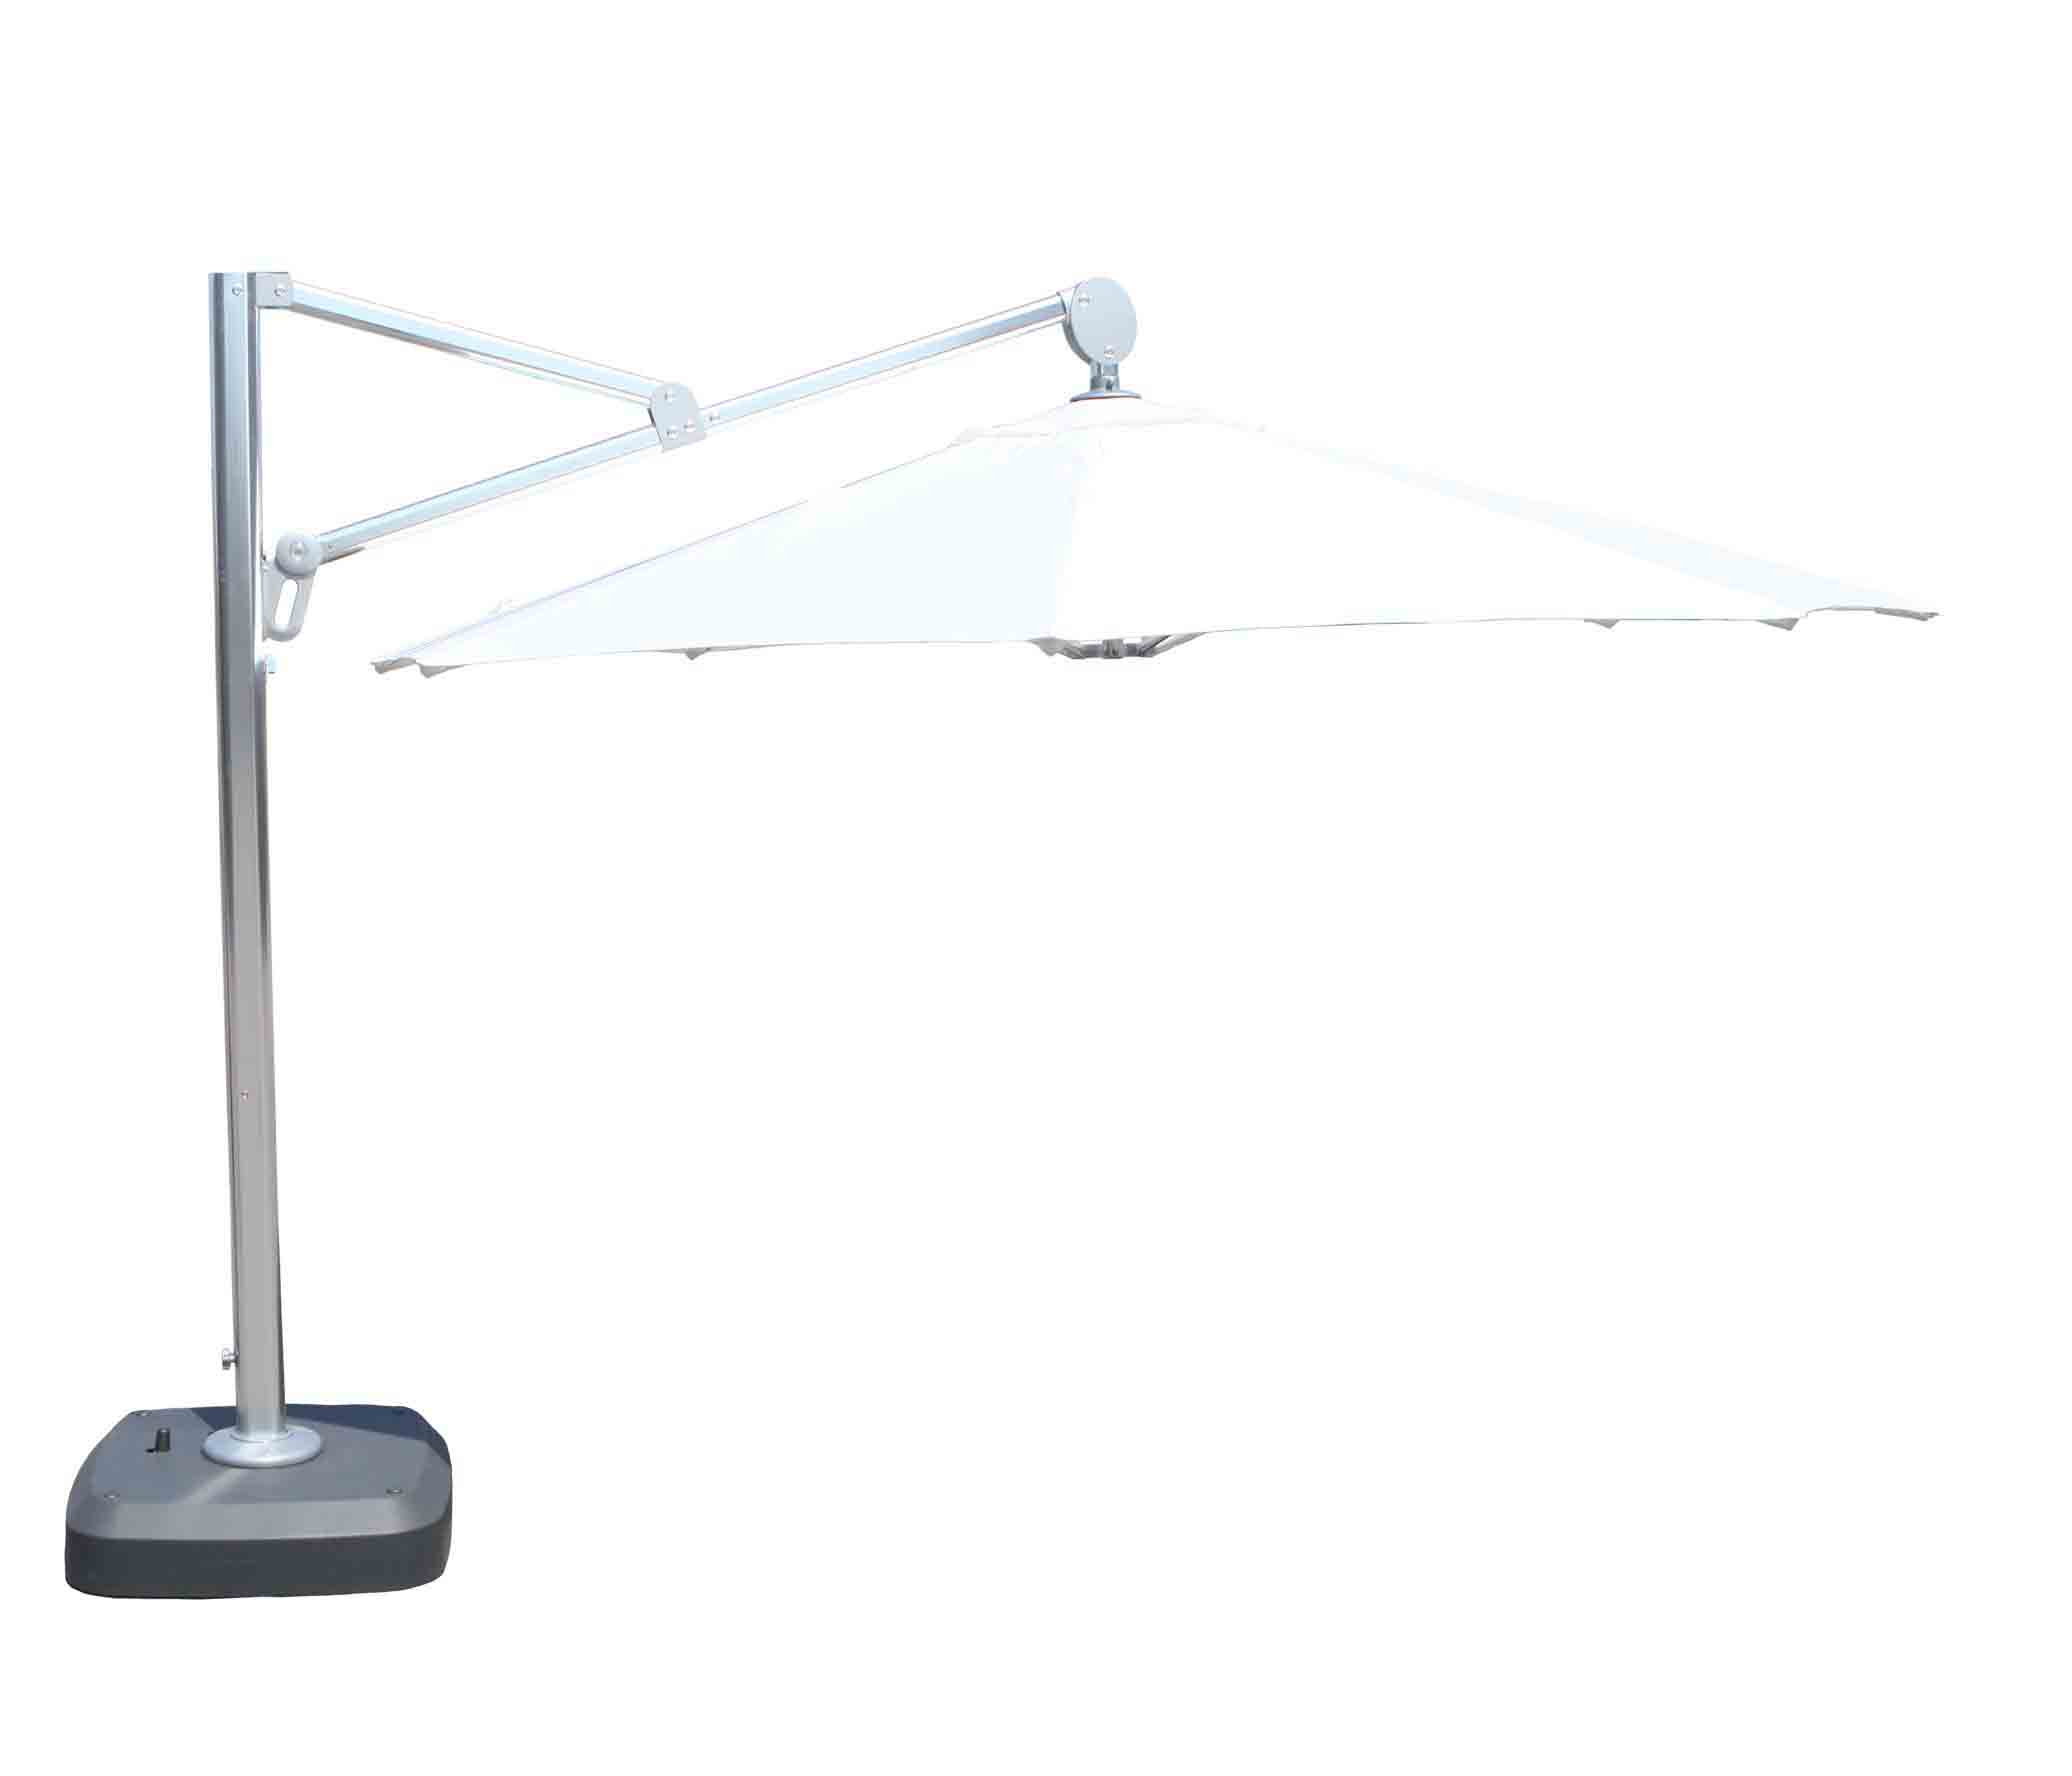 Patio Umbrella : Apex 11.5 ft. Cantilever